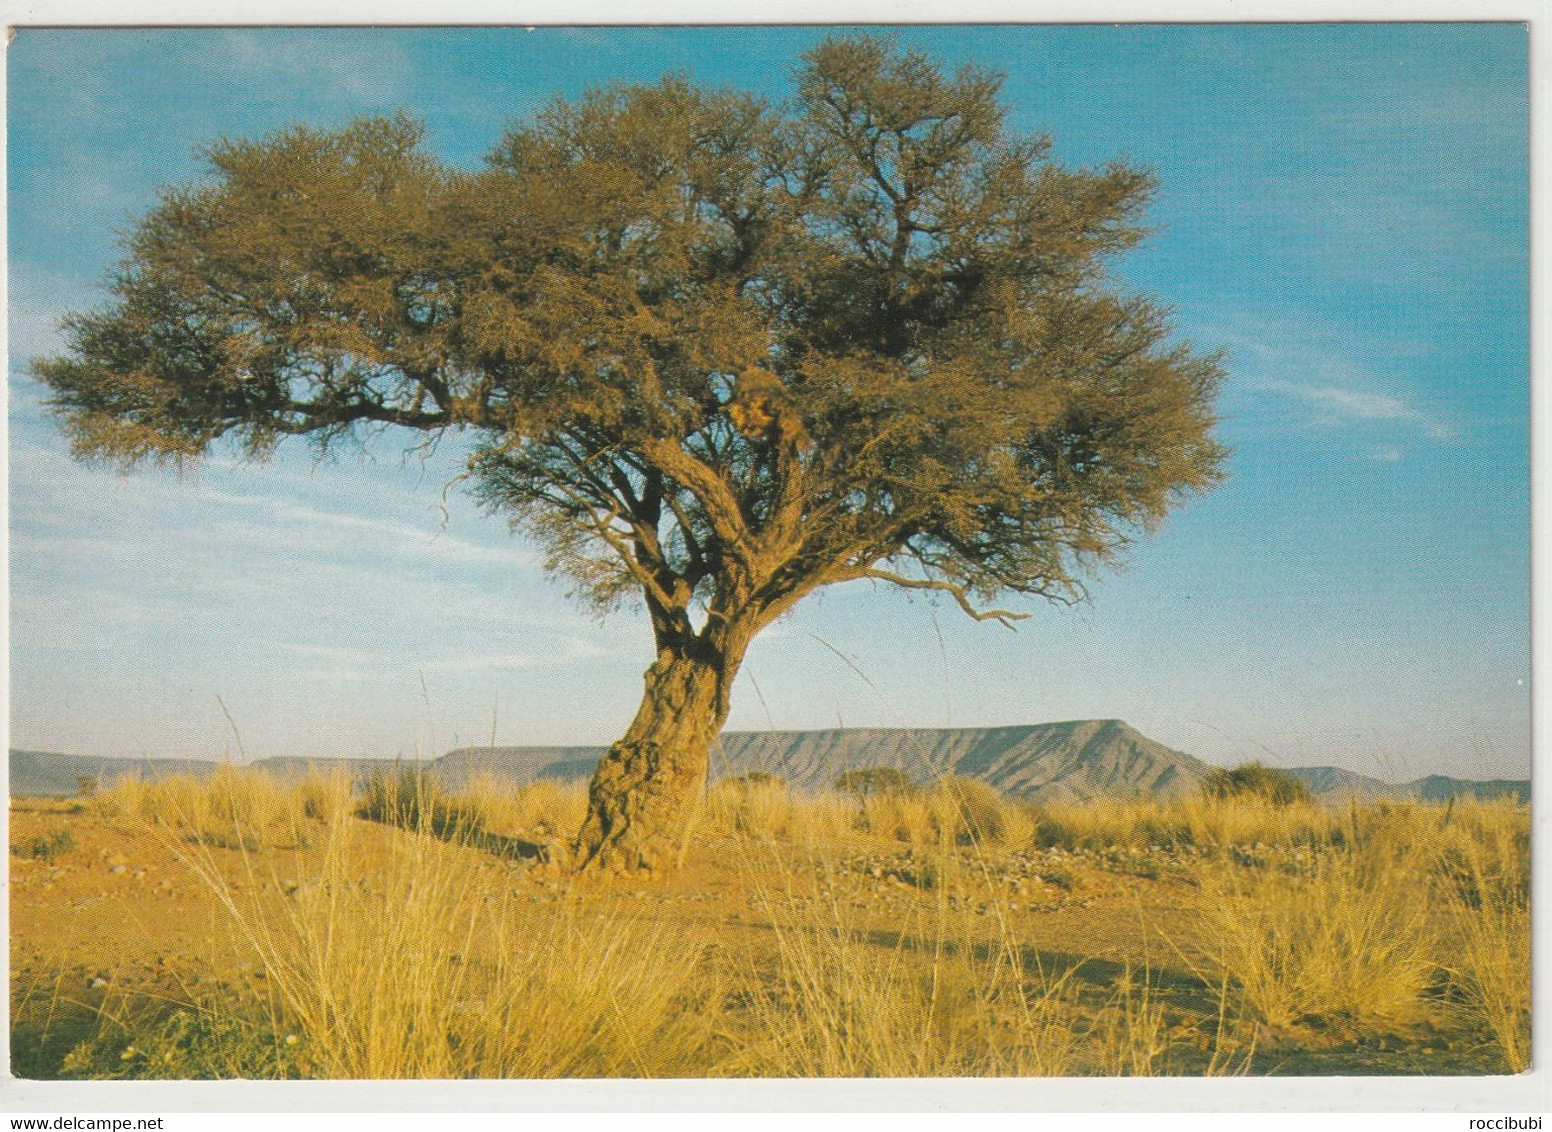 SWA, Kameldornbaum - Namibia